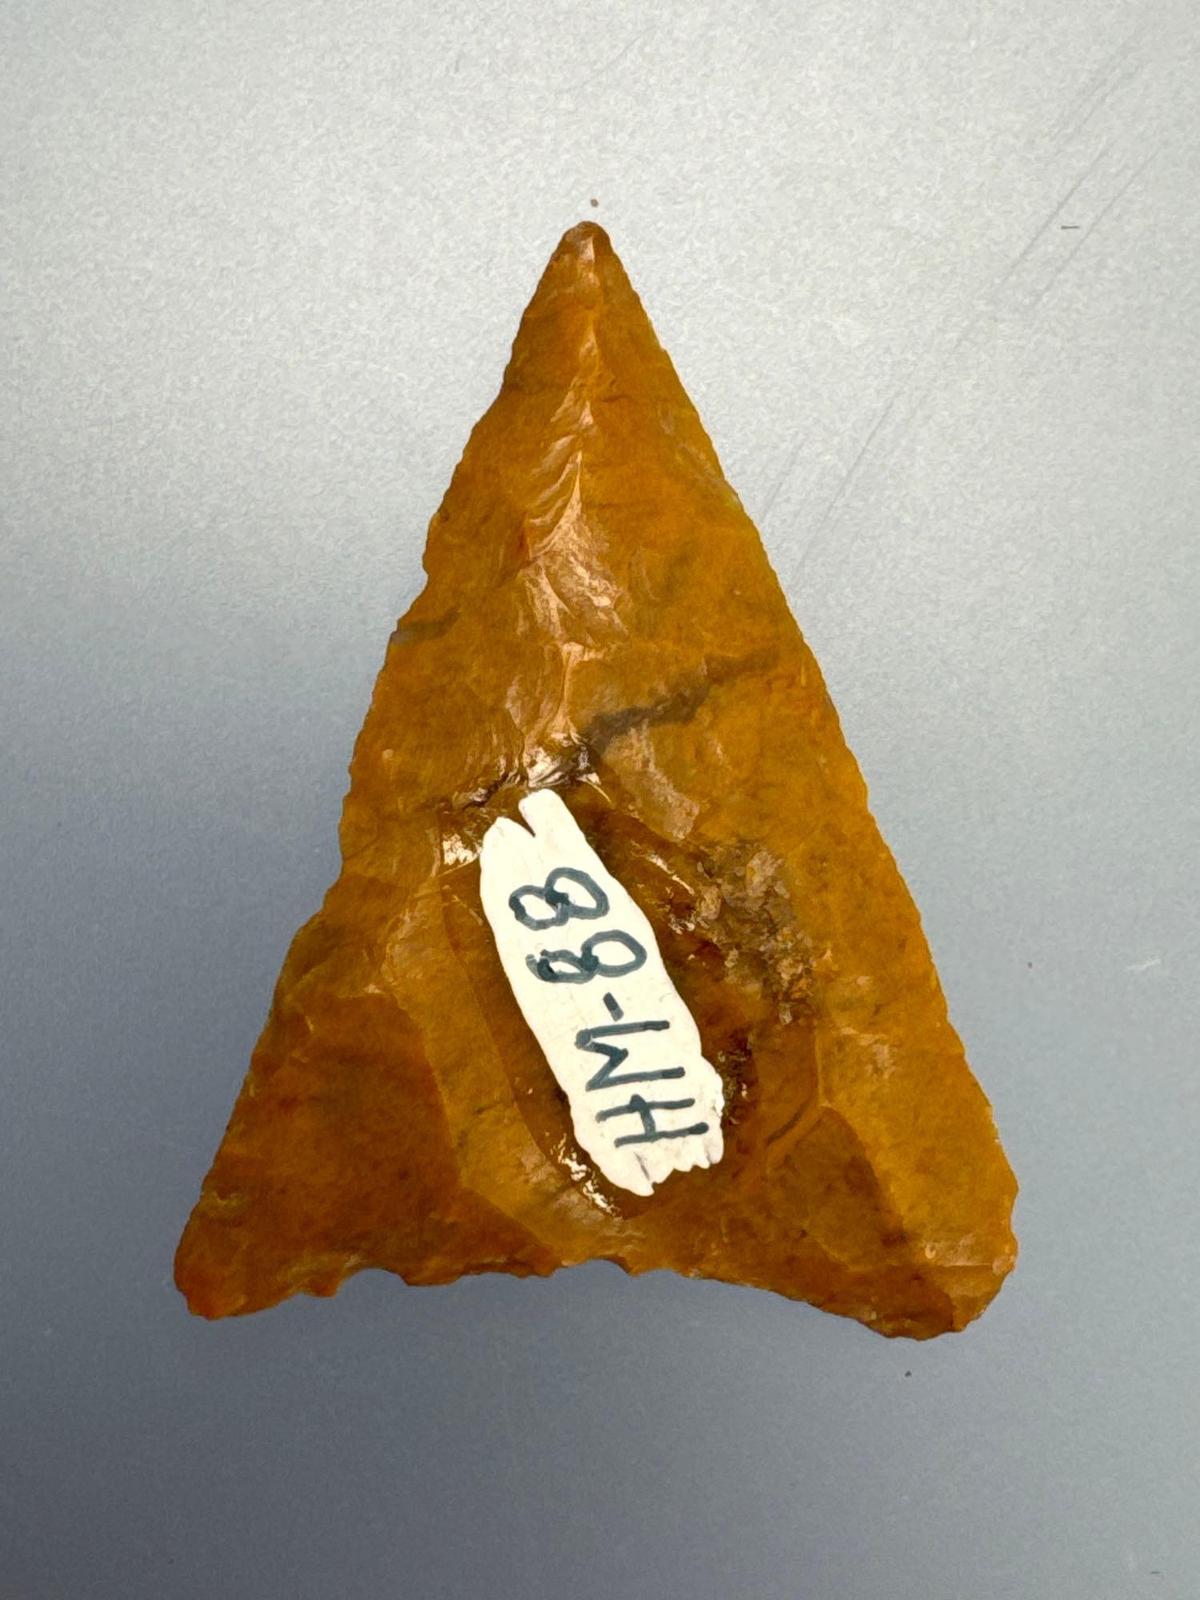 1 3/8" Jasper Triangle Arrowhead, Found in PA/NJ/NY Tristate Area, Ex: Harry Mucklin, Lemaster, Podp